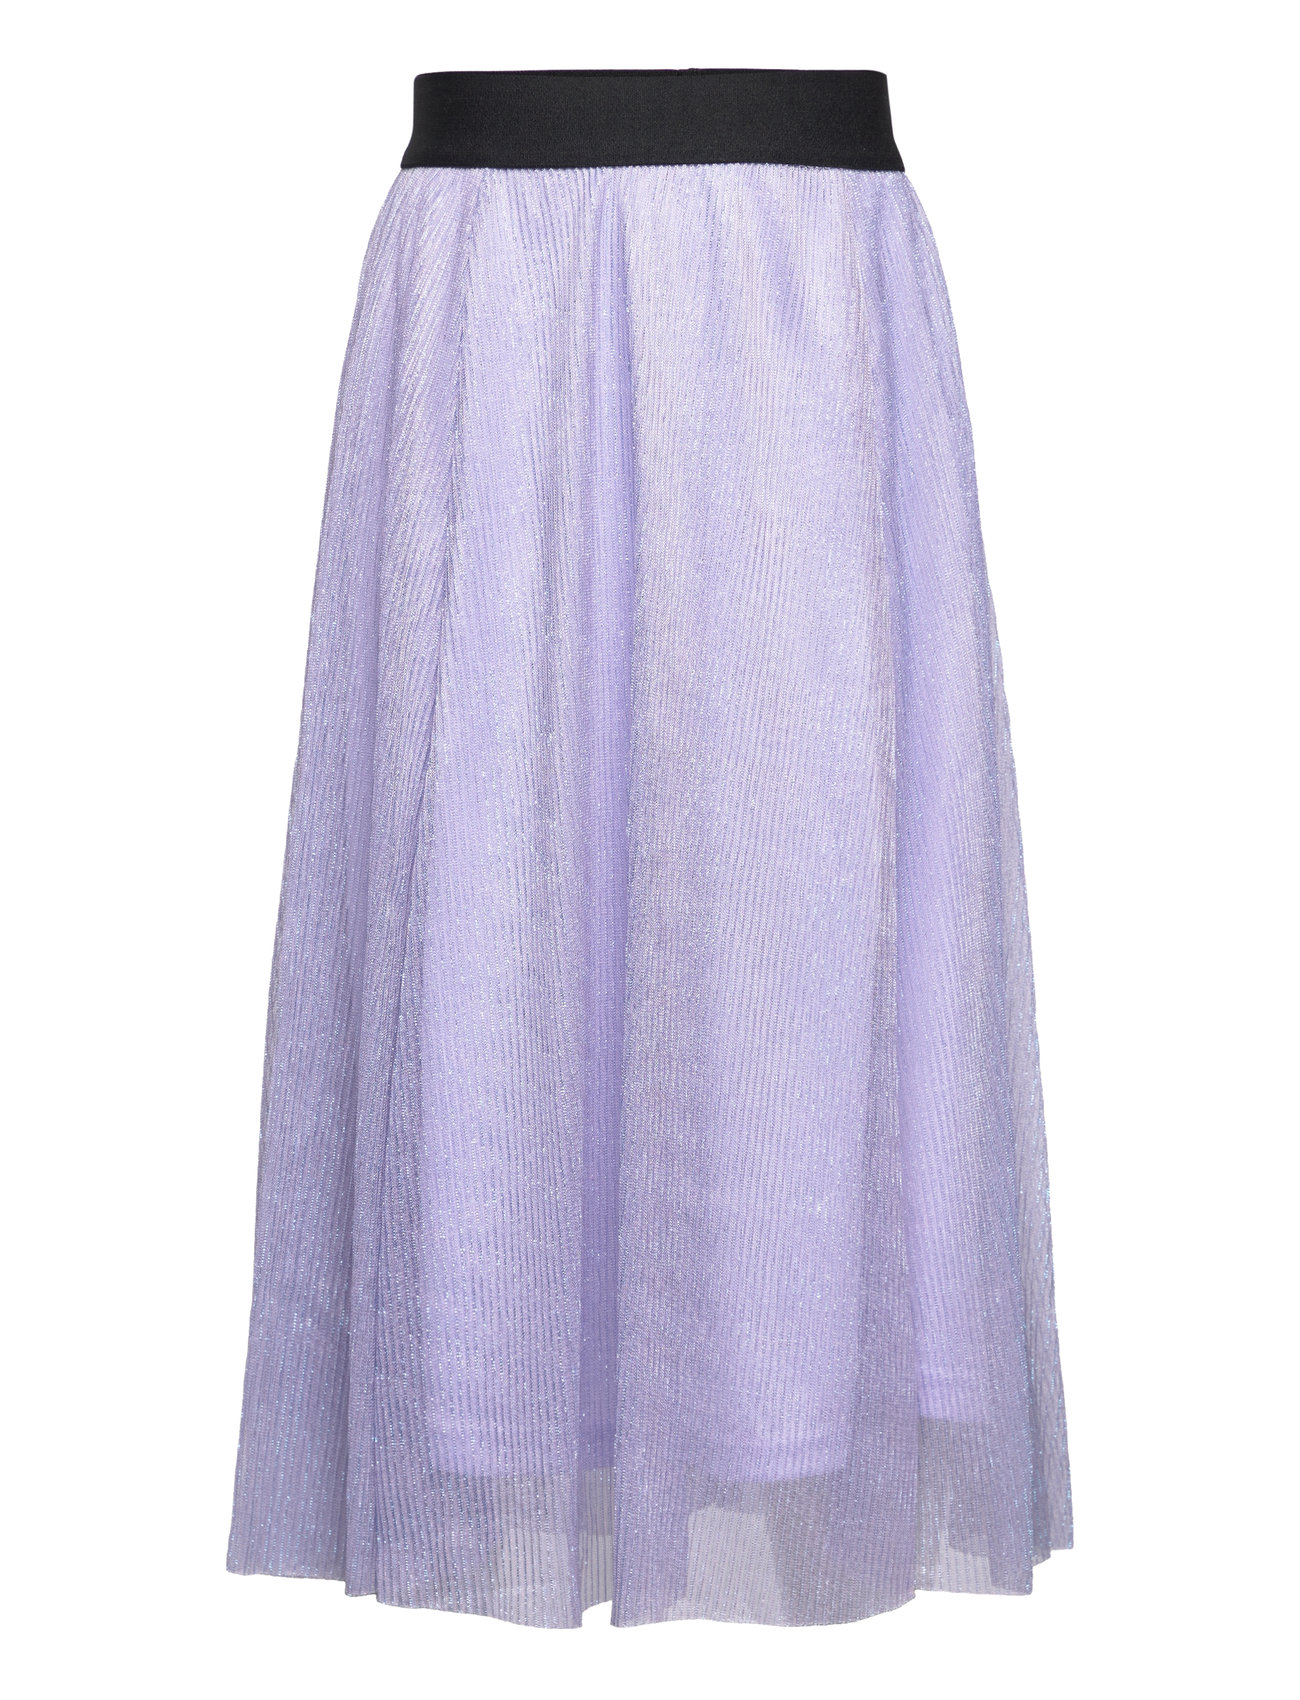 Kmgtinga Short Shine Skirt Jrs Dresses & Skirts Skirts Maxi Skirts Purple Kids Only